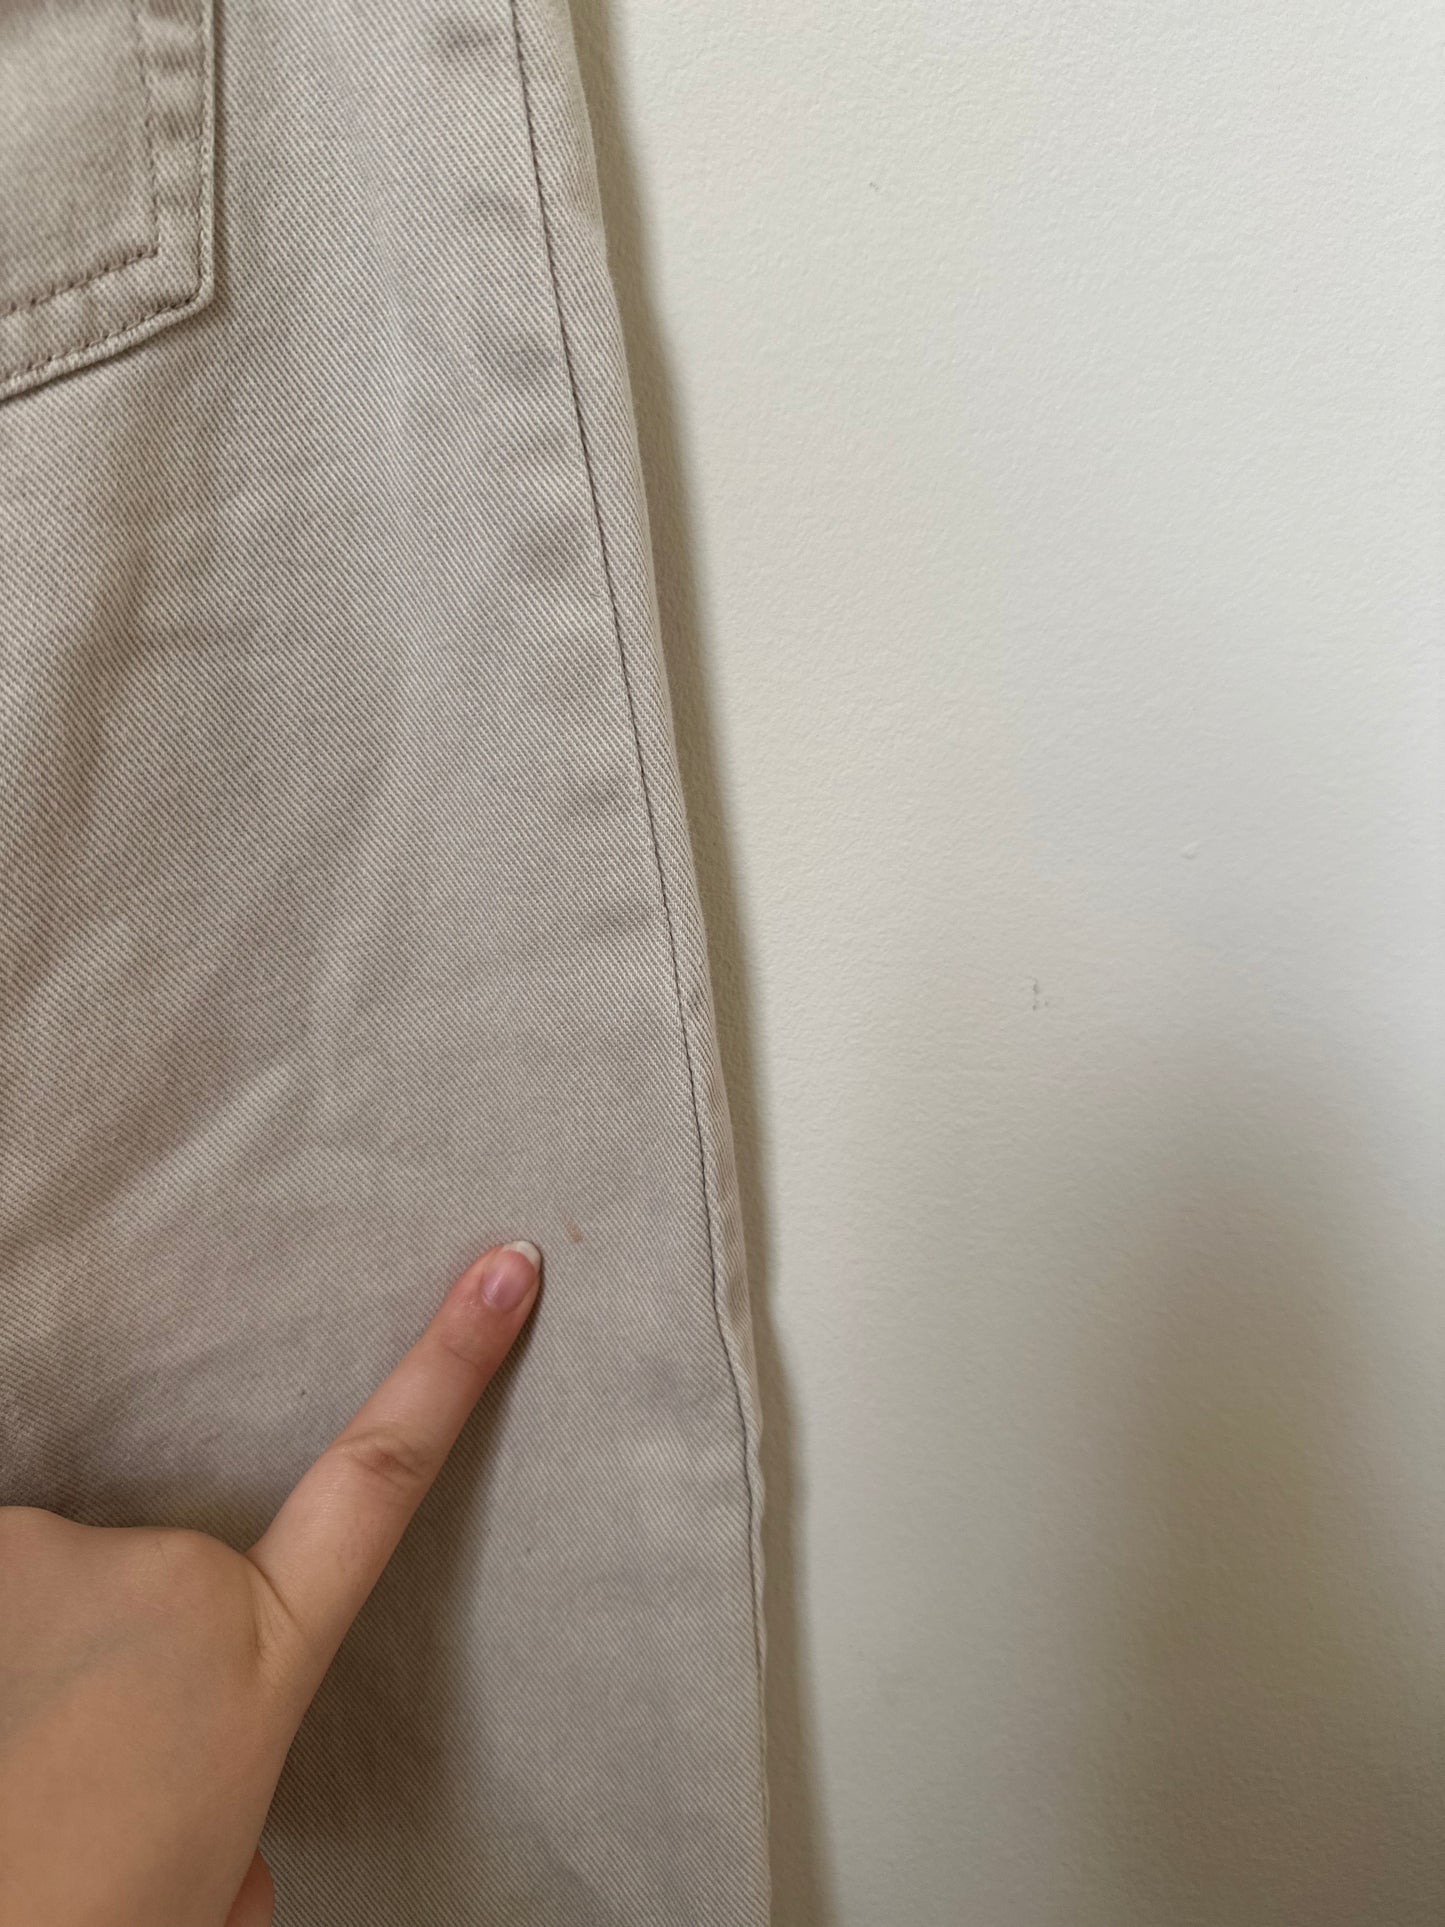 Tommy Hilfiger Cream Colored Denim Pants